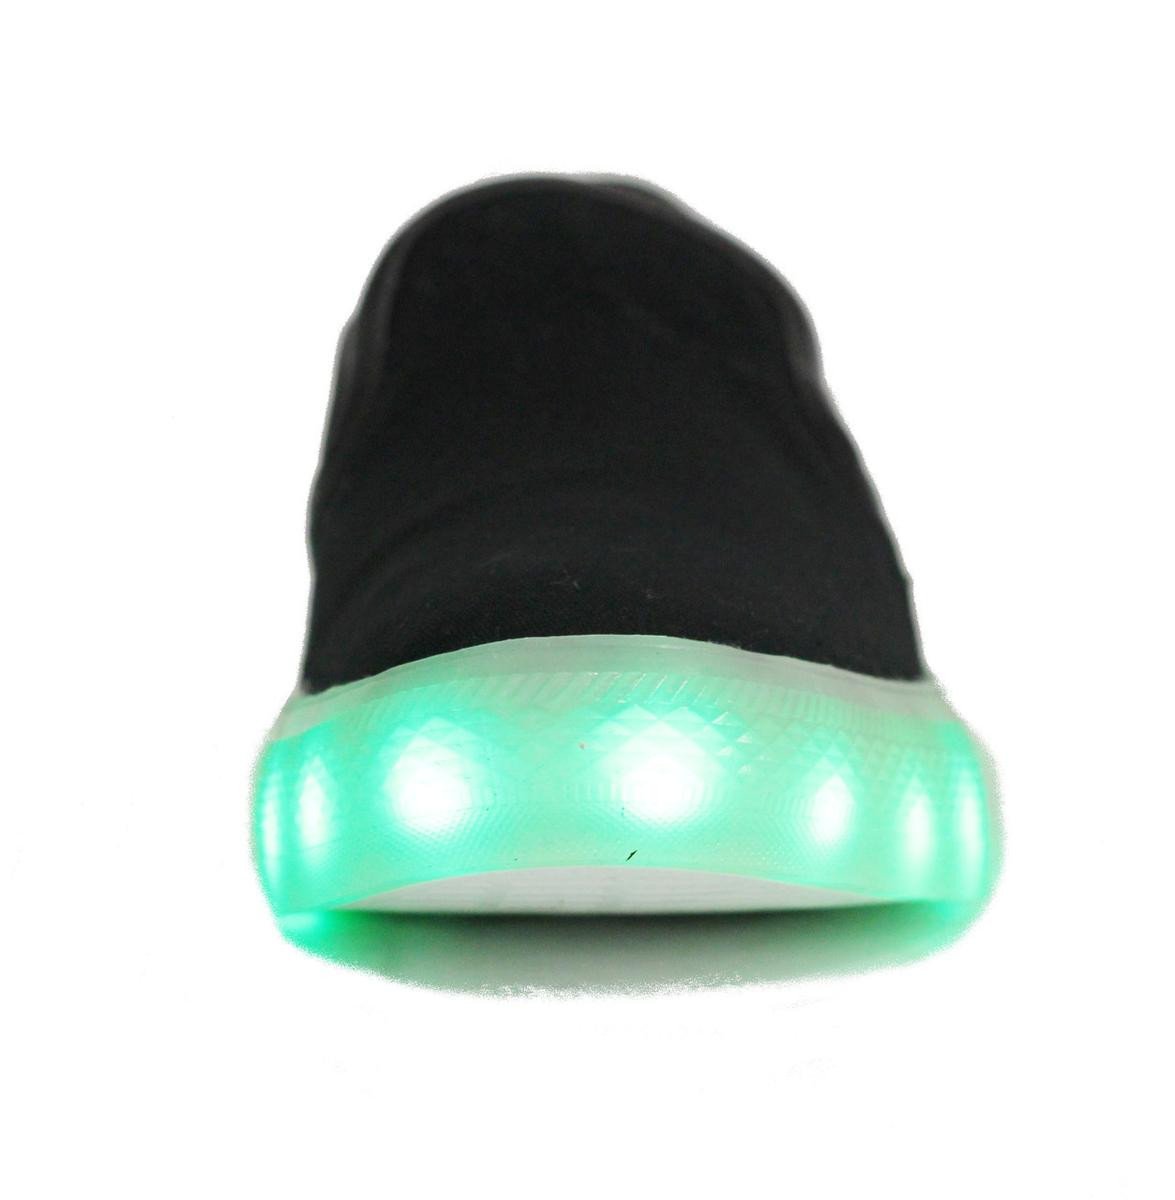 Jordan04 Casual Light-Up Snealer Black/LED Multi